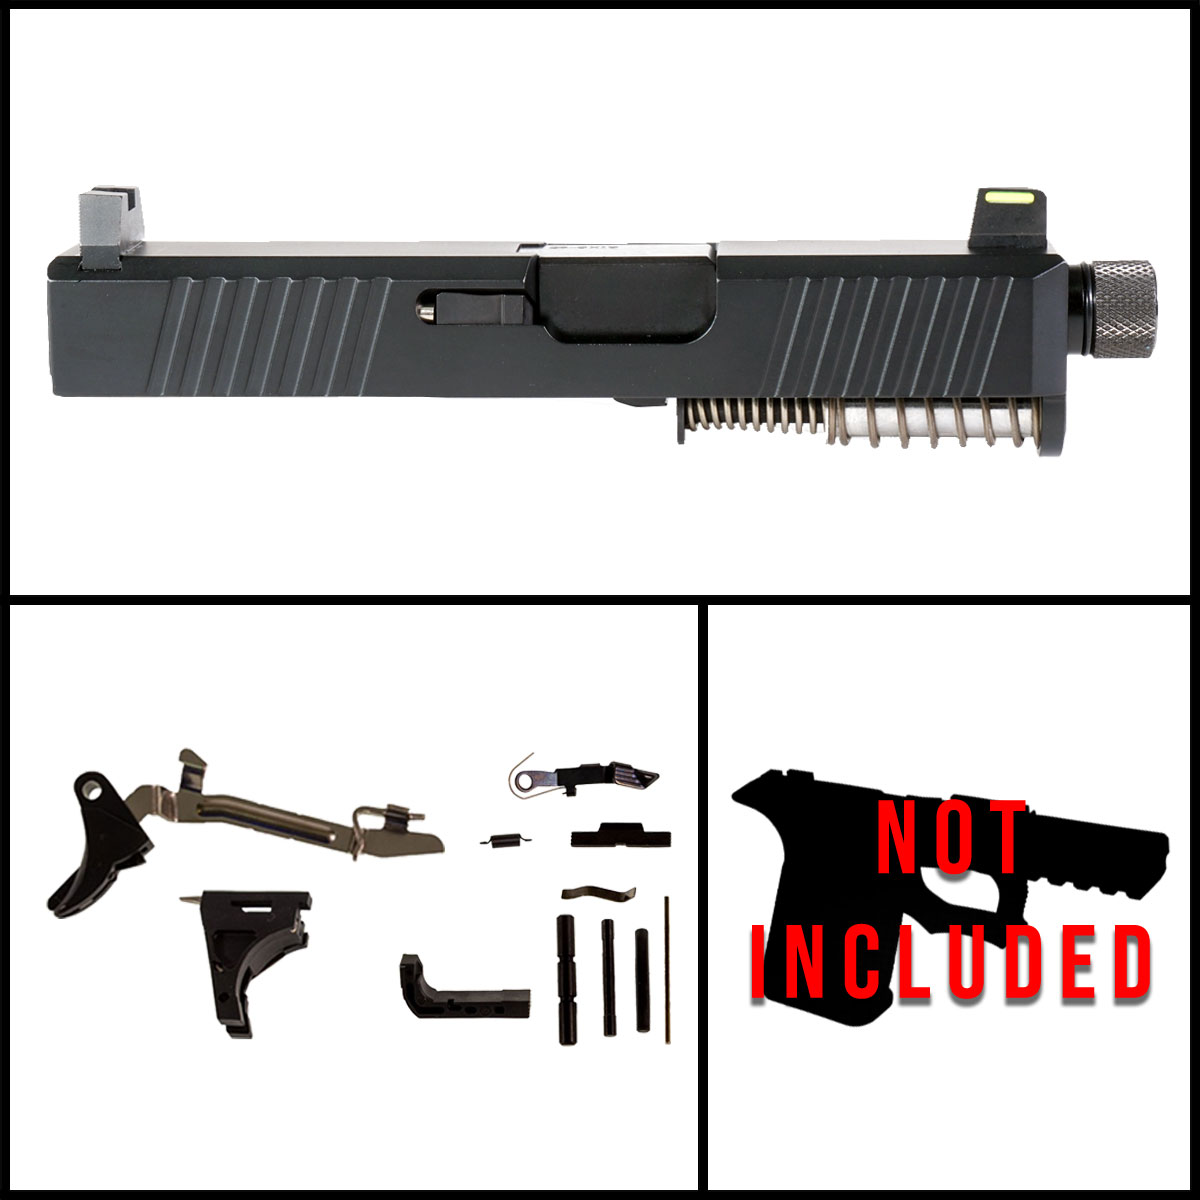 DDS 'Homeland Security' 9mm Full Gun Kit - Glock 26 Gen 1-3 Compatible